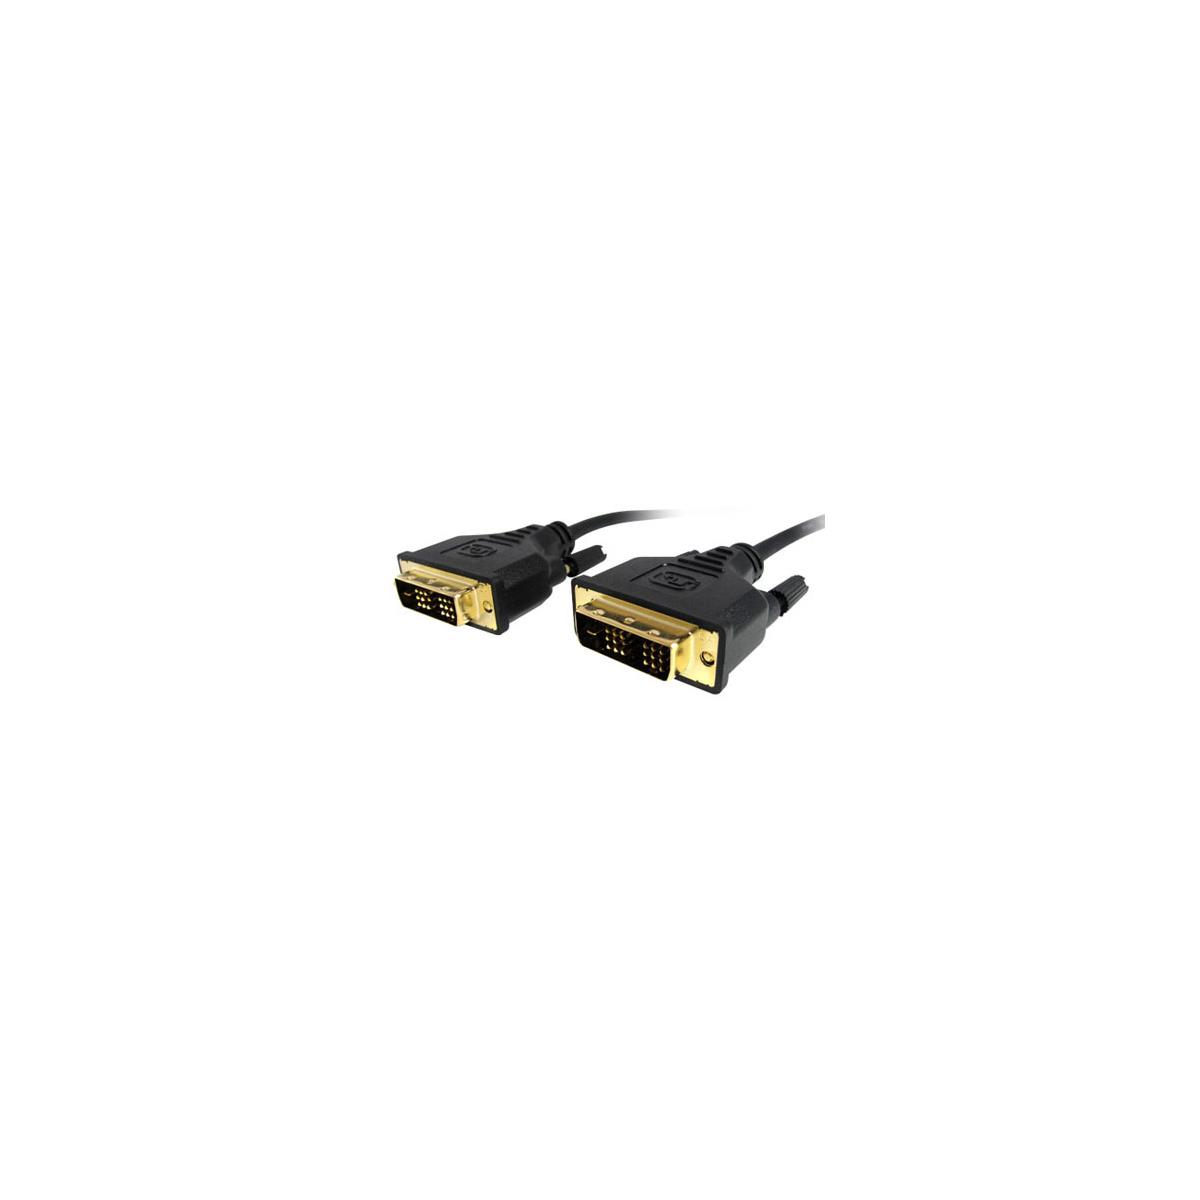 Image of Comprehensive 3' MicroFlex Low Profile DVI-D Male to DVI-D Male Cable